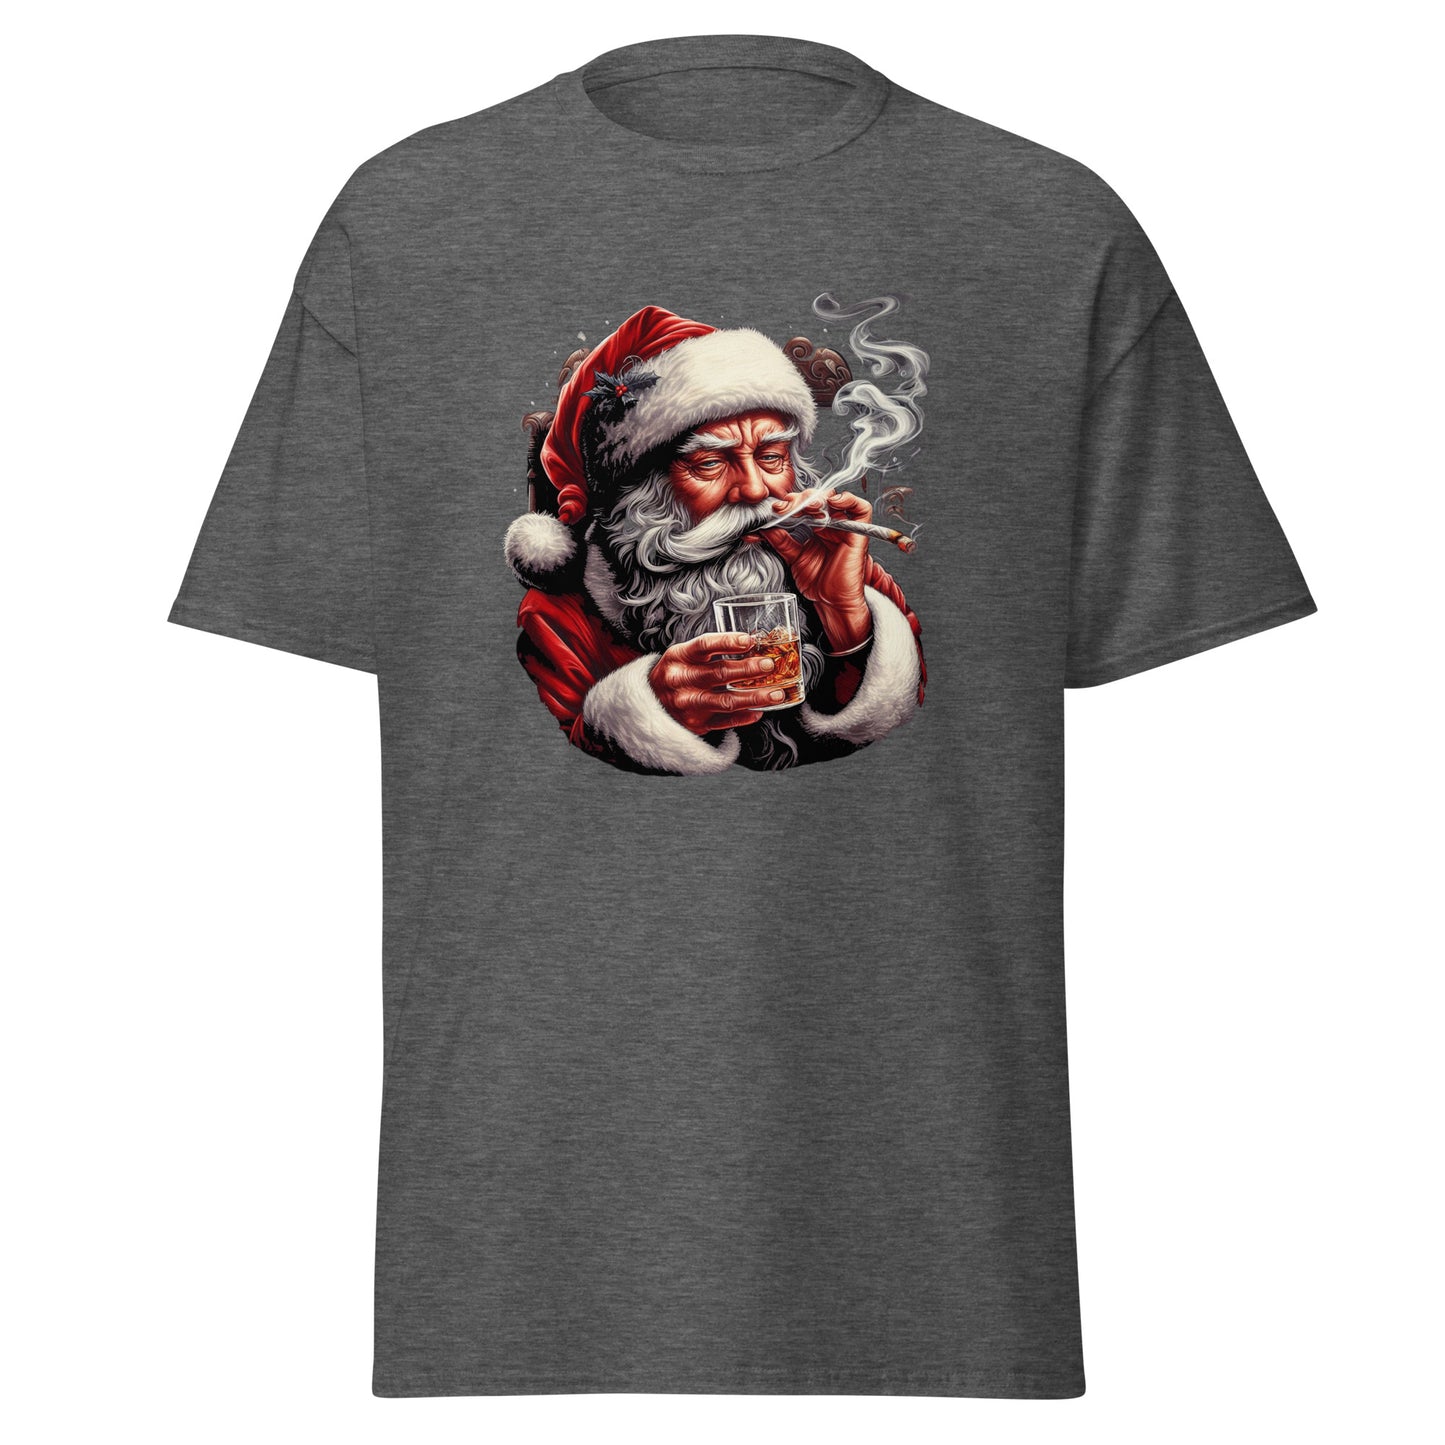 Bad Santa T-Shirt - Naughty, Nice, and a Dash of Mischief